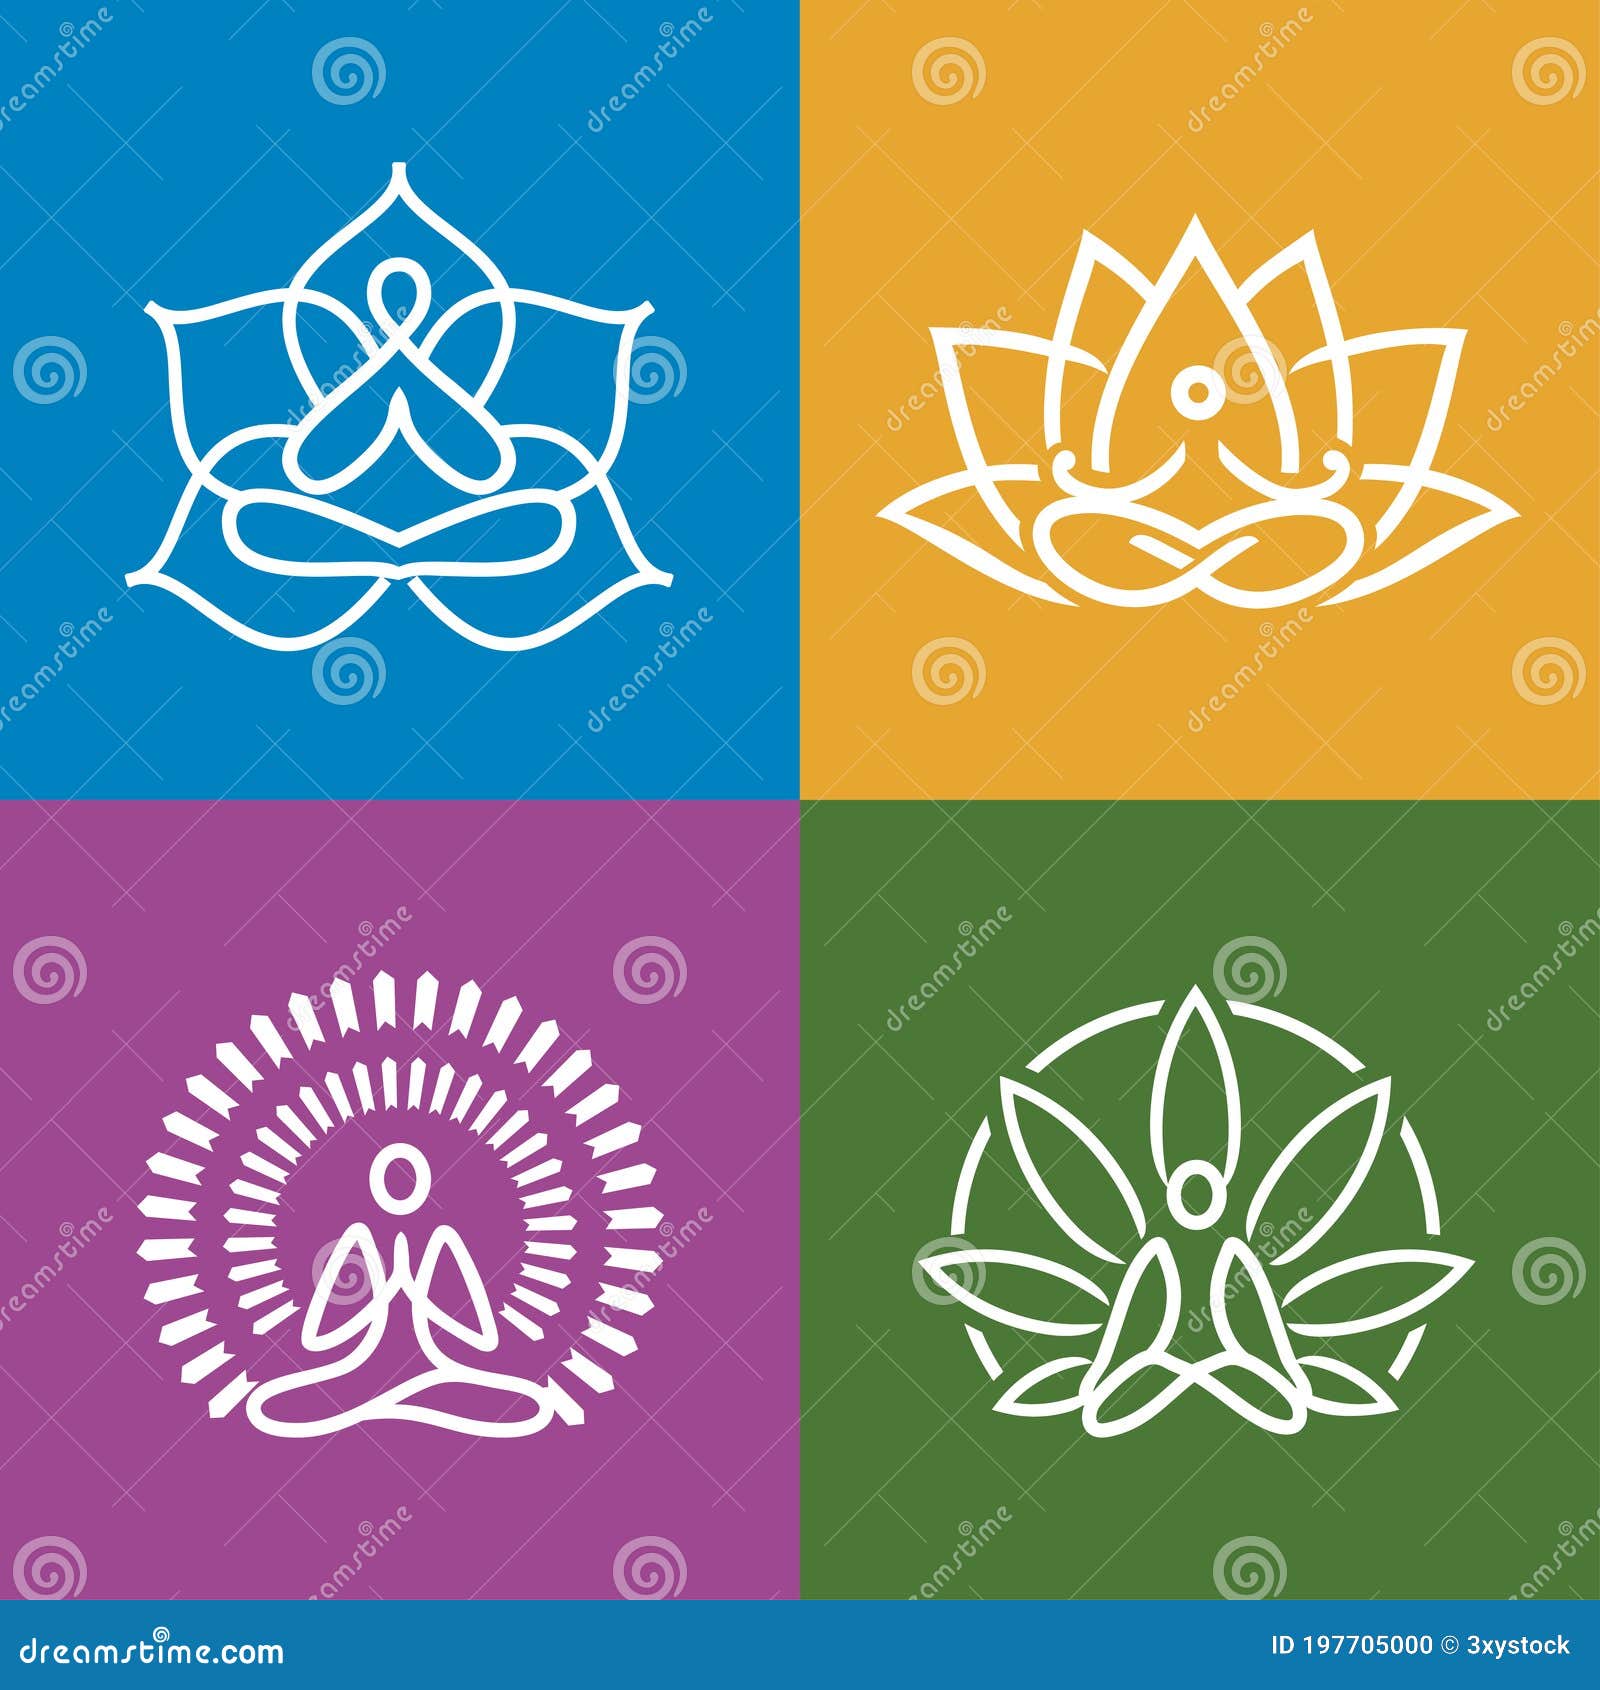 Abstract Yoga Logos Set. Meditation Practice and Yoga Line Icons ...